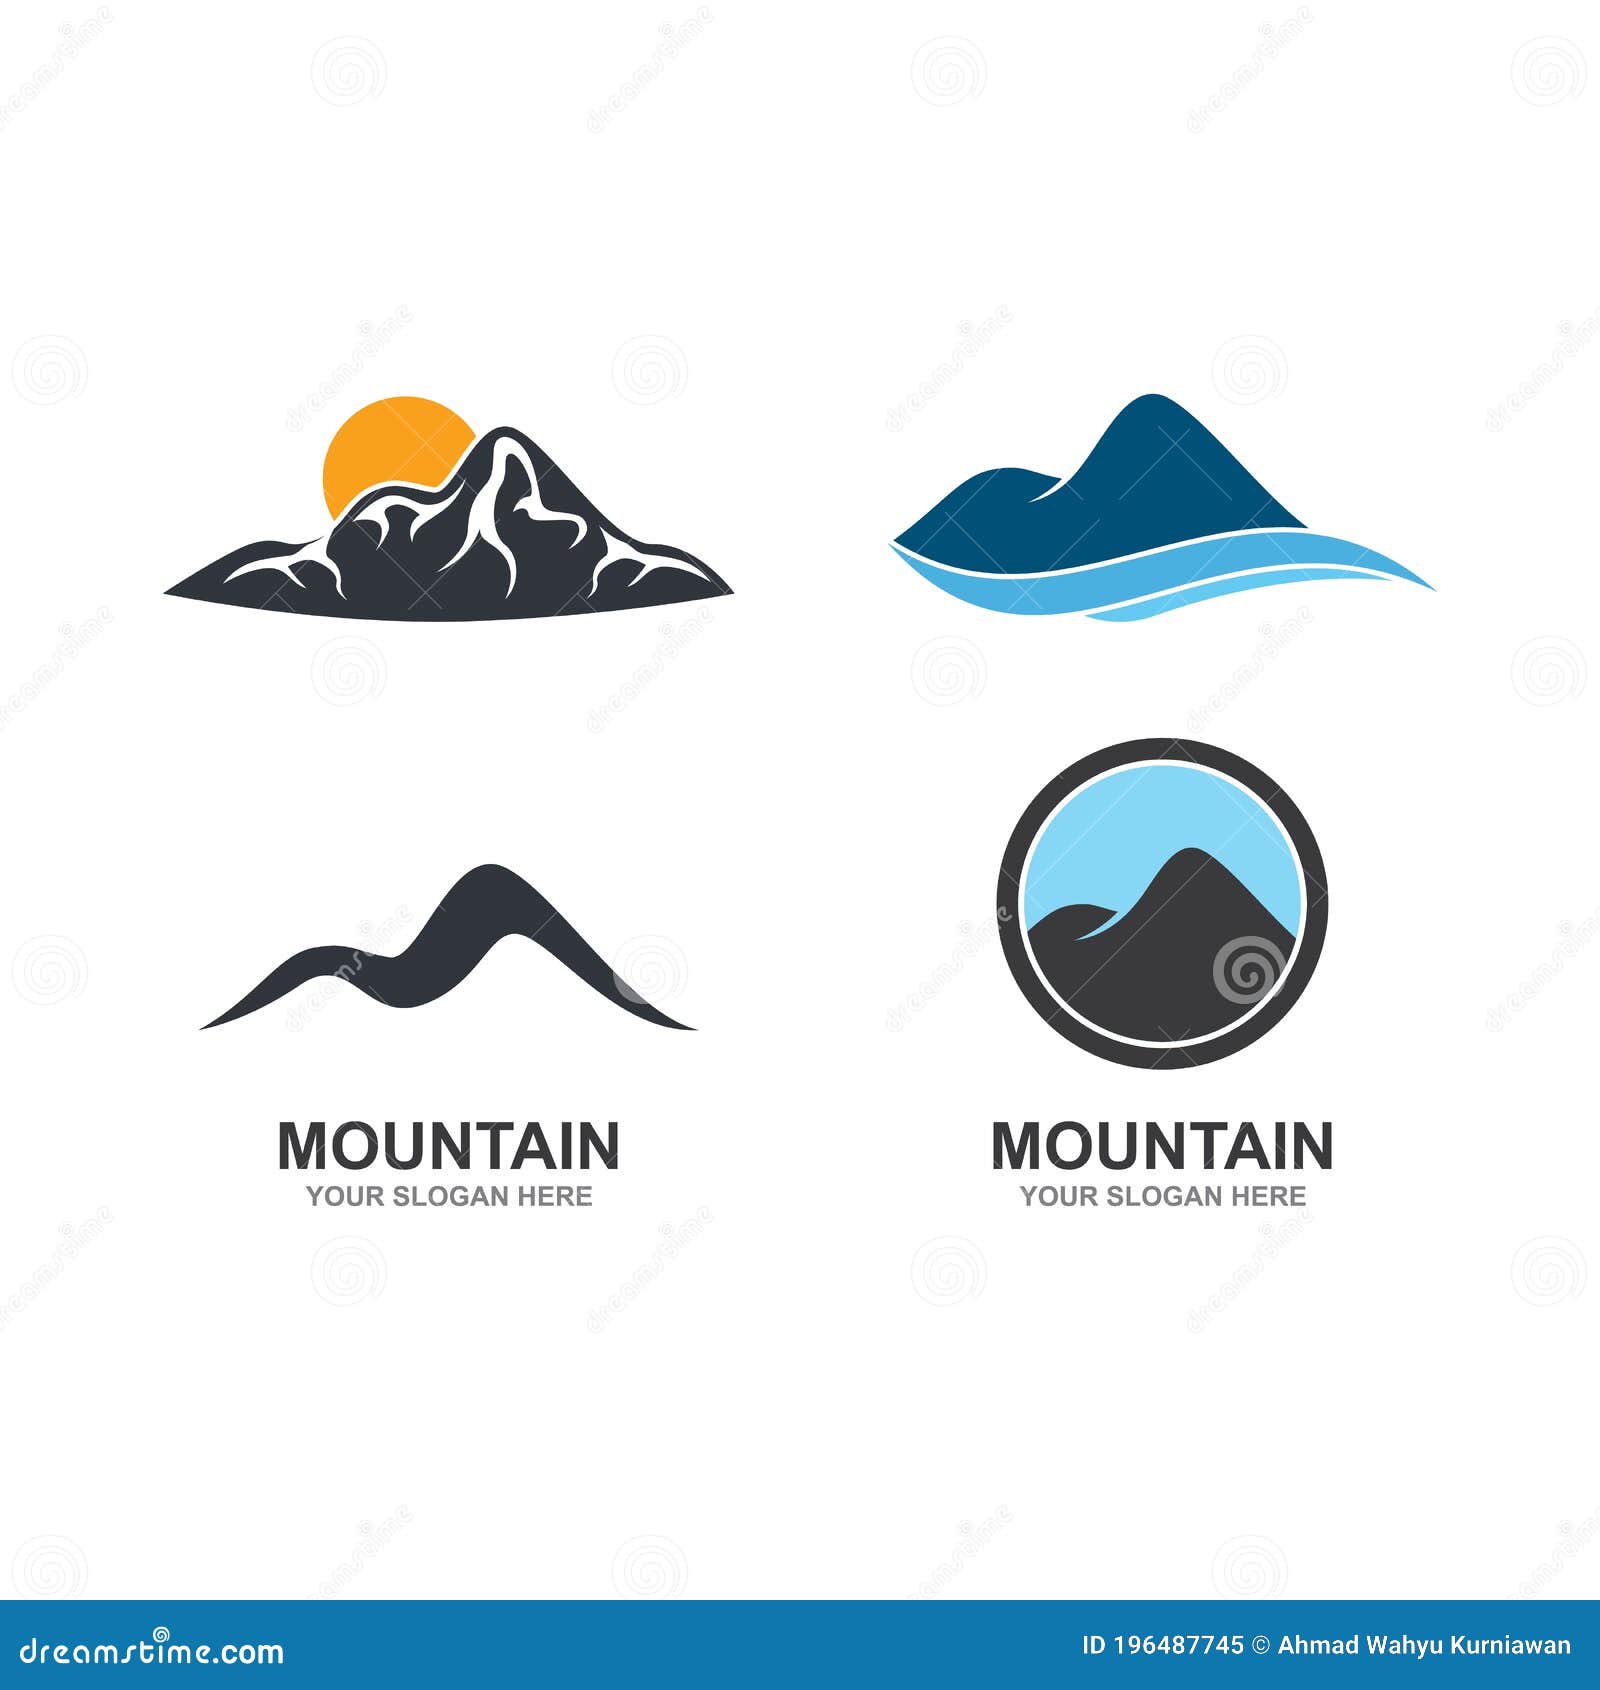 Mountain illustration stock vector. Illustration of design - 196487745